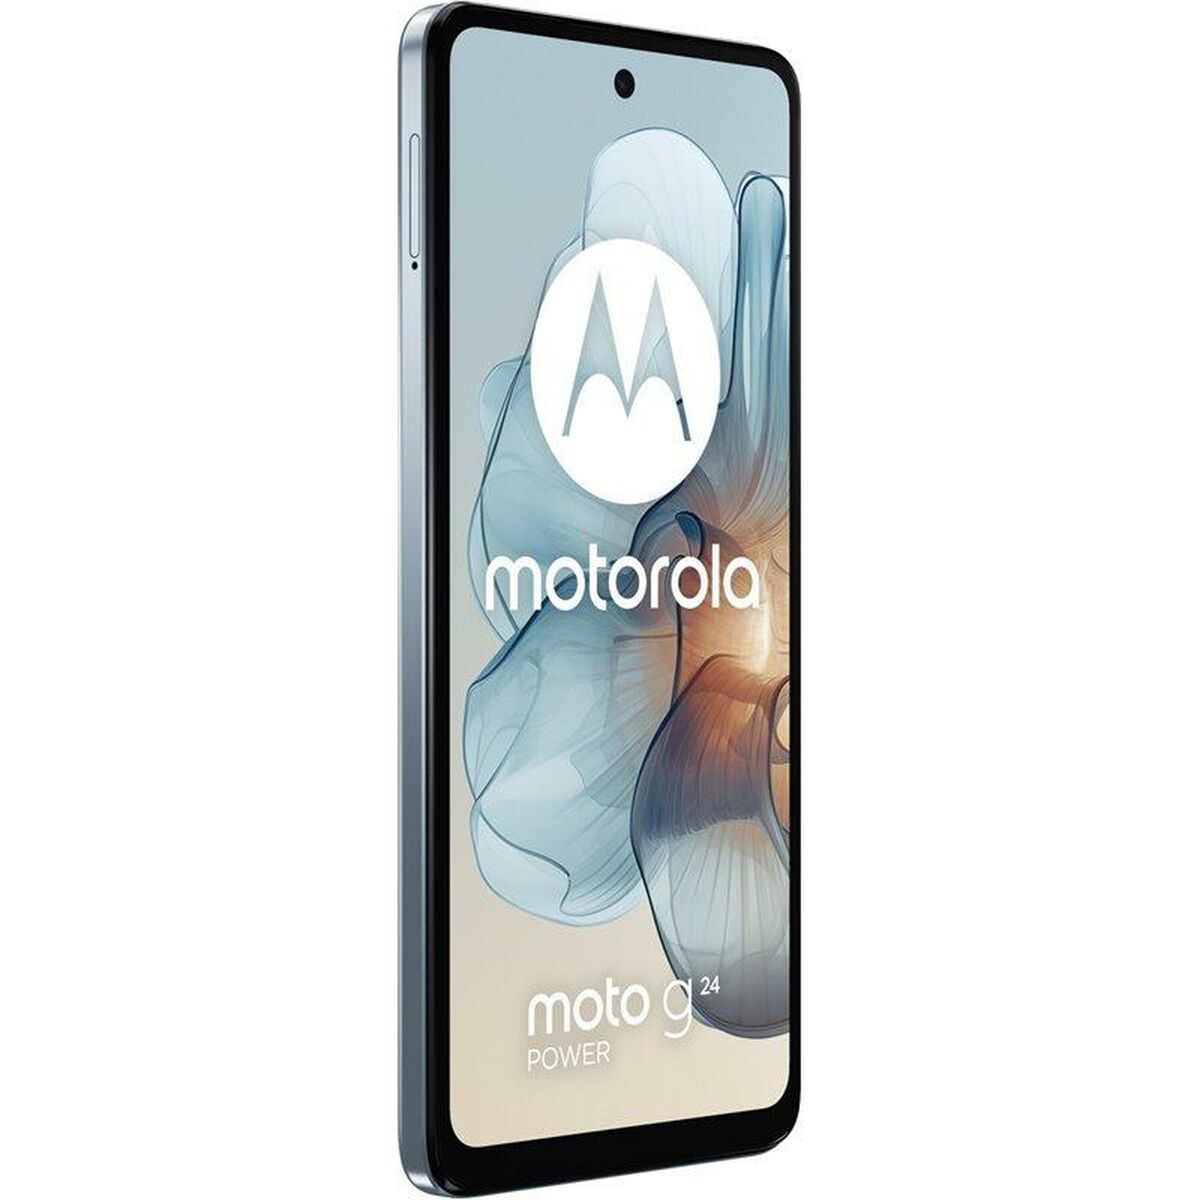 Smartphone Motorola Moto G24 6,6" MediaTek Helio G85 8 GB RAM 256 GB Blau - CA International 